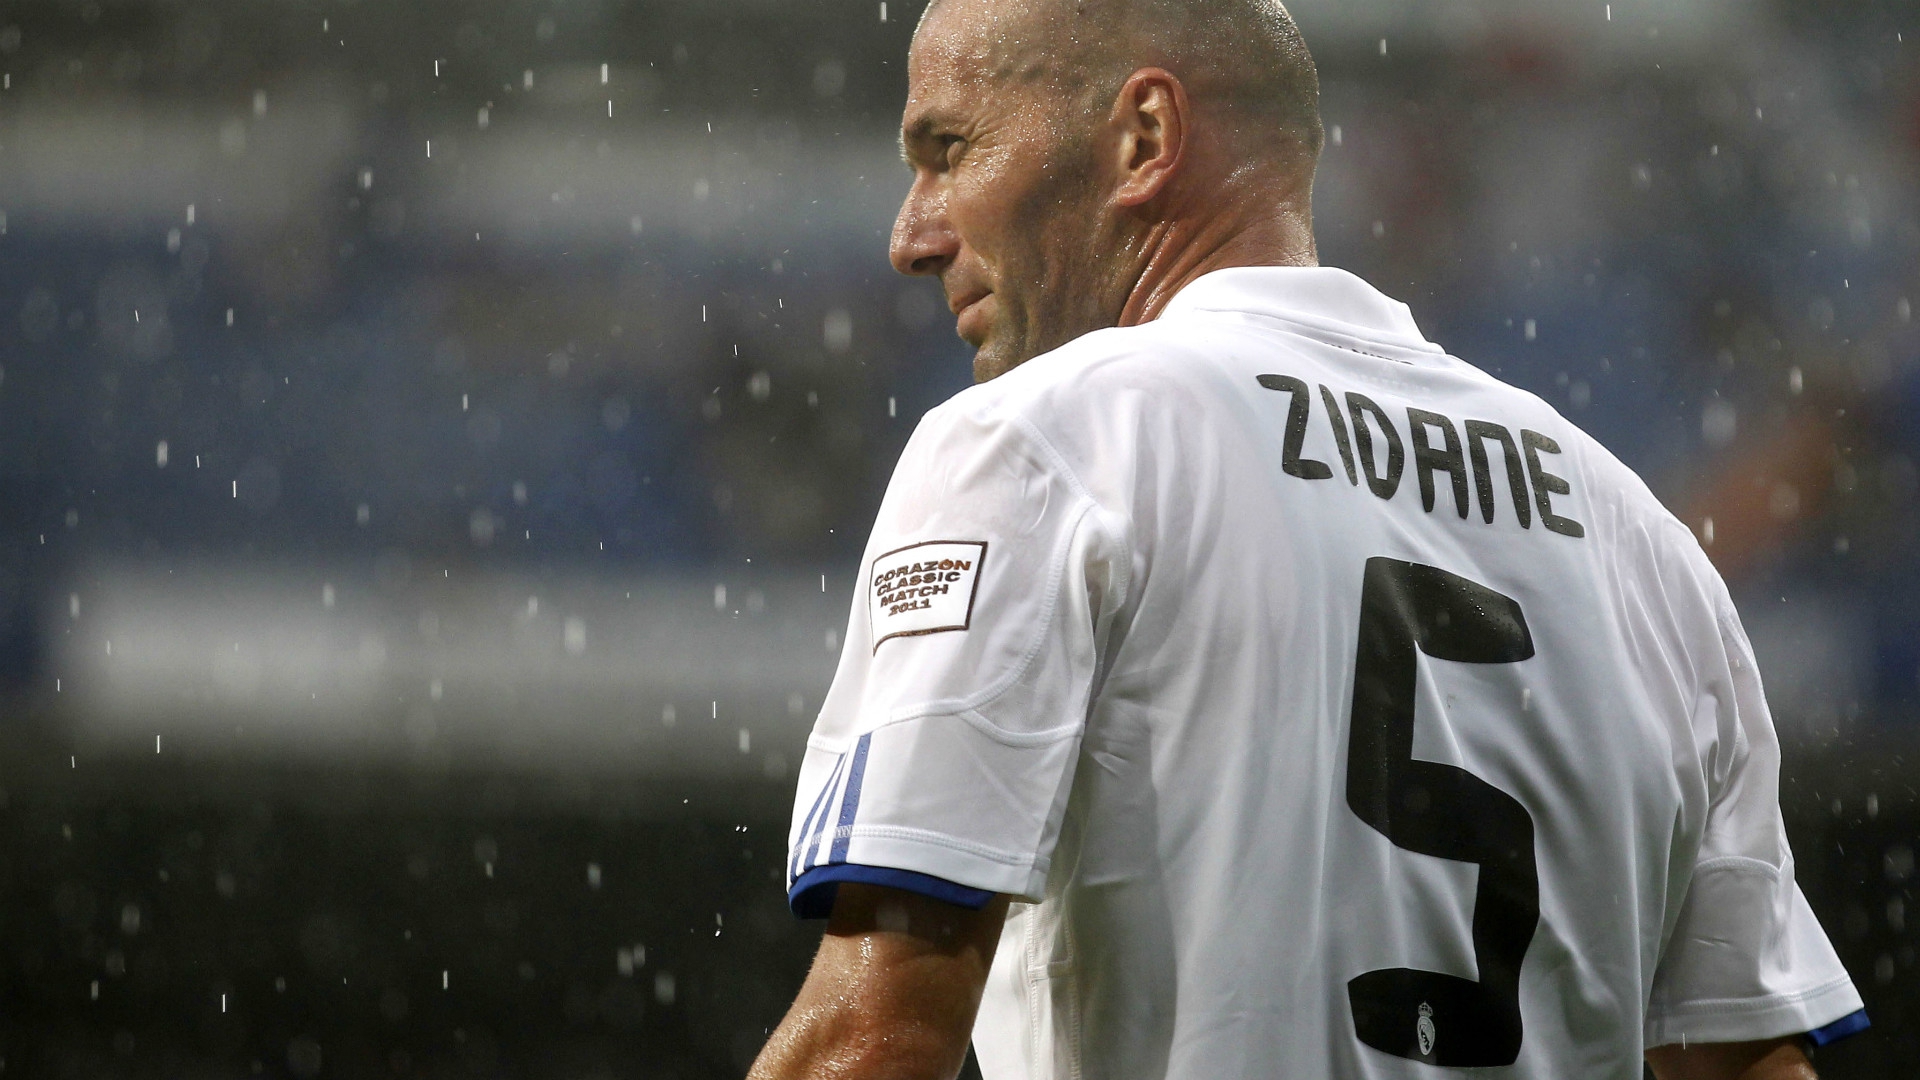 Zinedine Zidane Wallpaper Image Photos Pictures Background